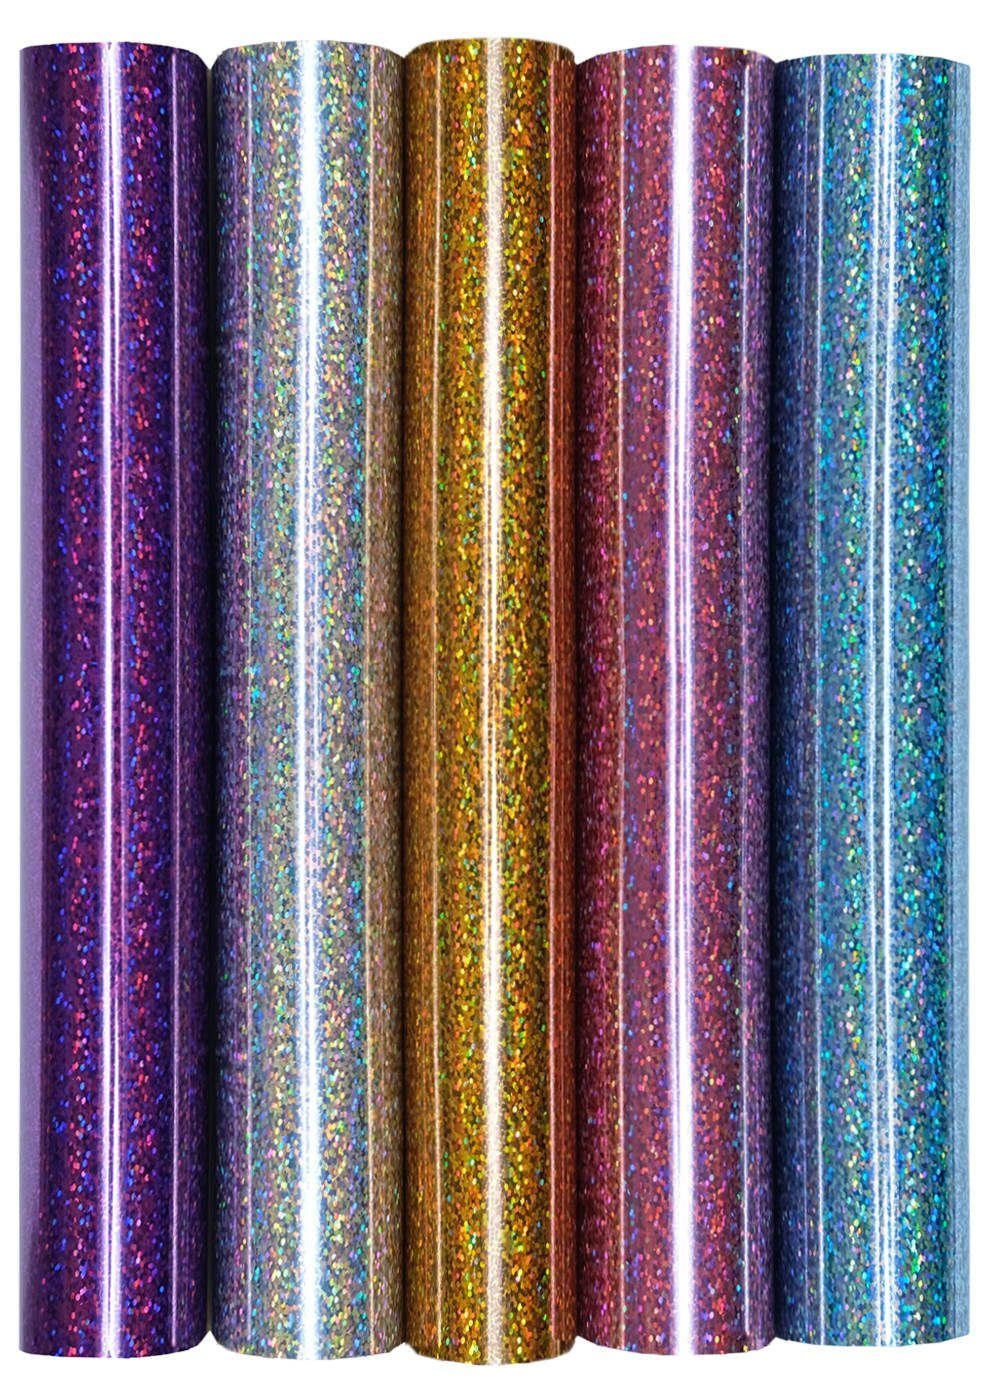 Hilltop Transparentpapier 22er Set Glitzer A4 Transferfolie/Textilfolie zum Aufbügeln Rainbow Multicolor